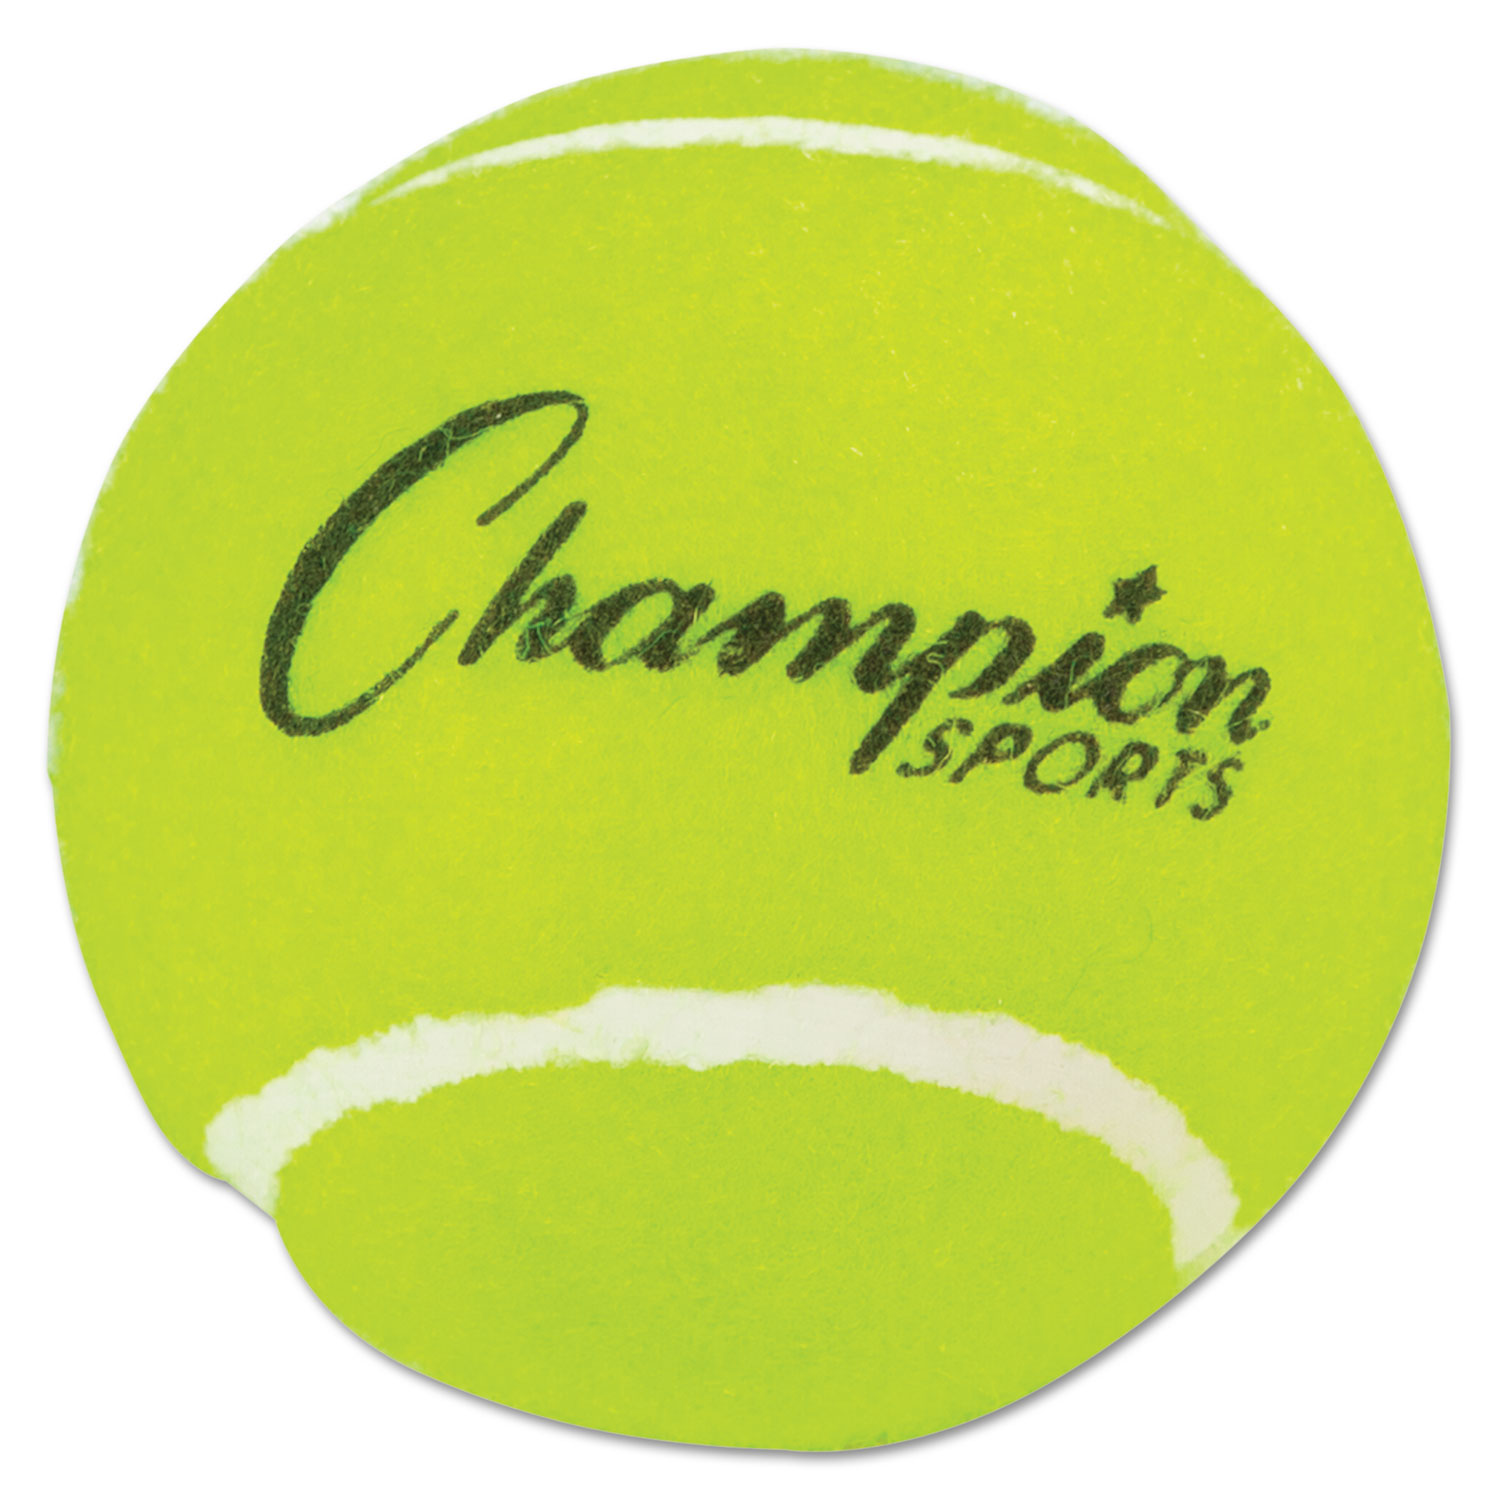  Champion Sports TB3 Tennis Balls, 2 1/2 Diameter, Rubber, Yellow, 3/Pack (CSITB3) 